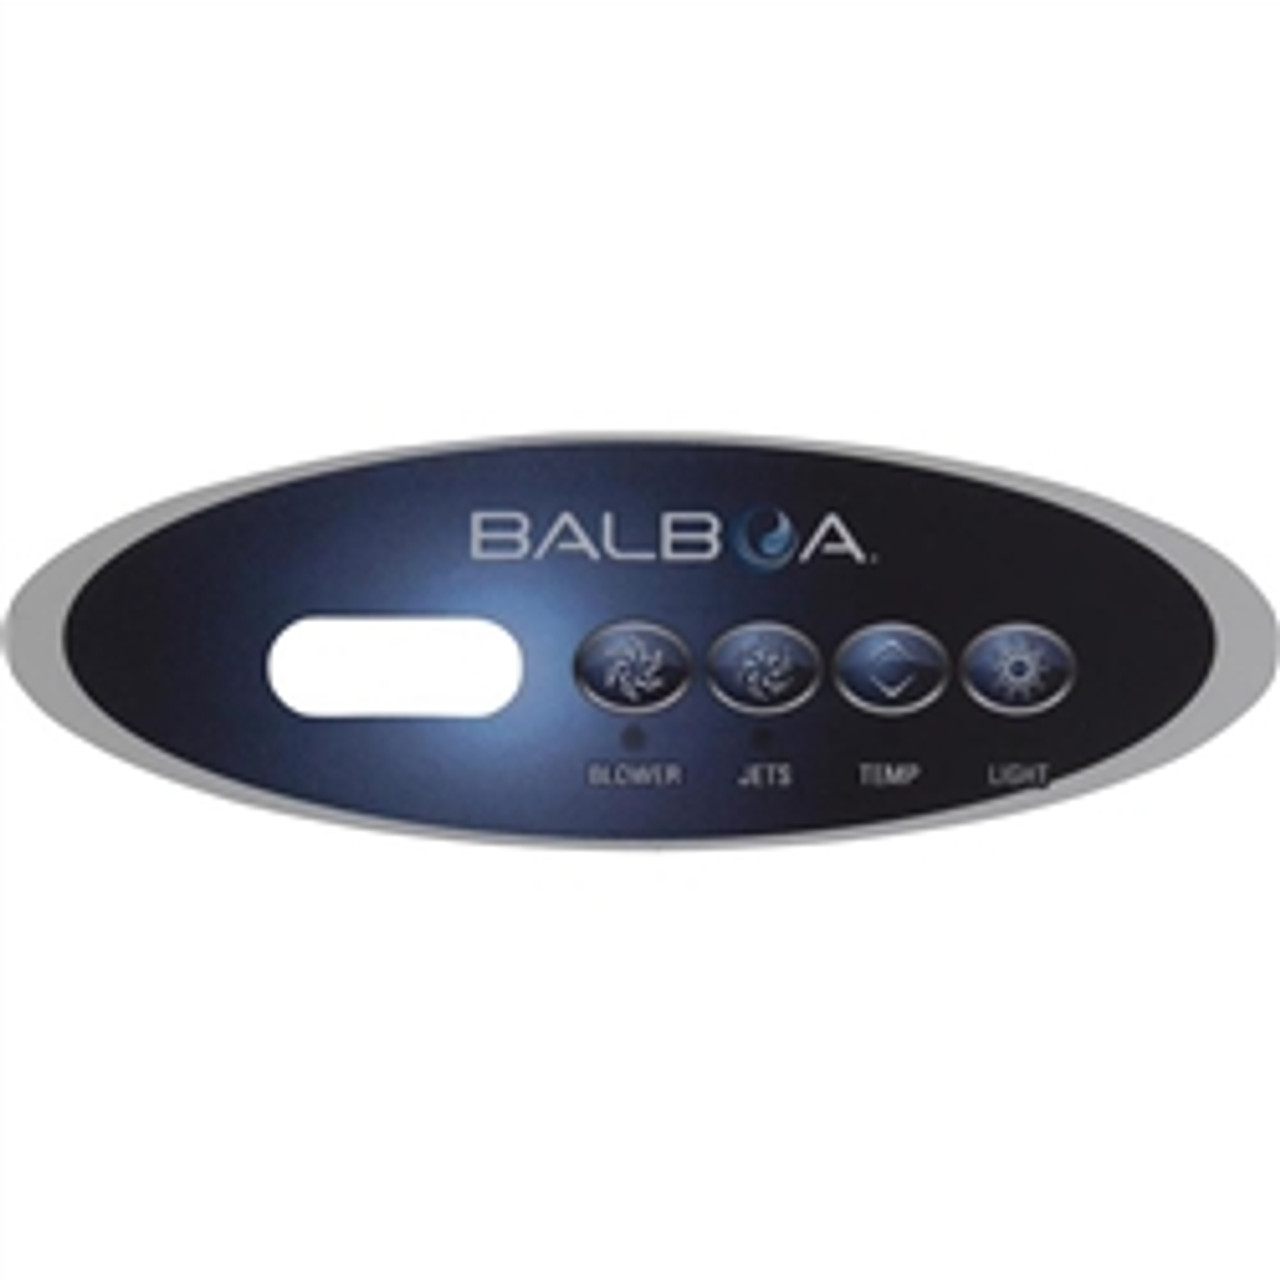 Balboa VL240 Overlay Sticker, 11520